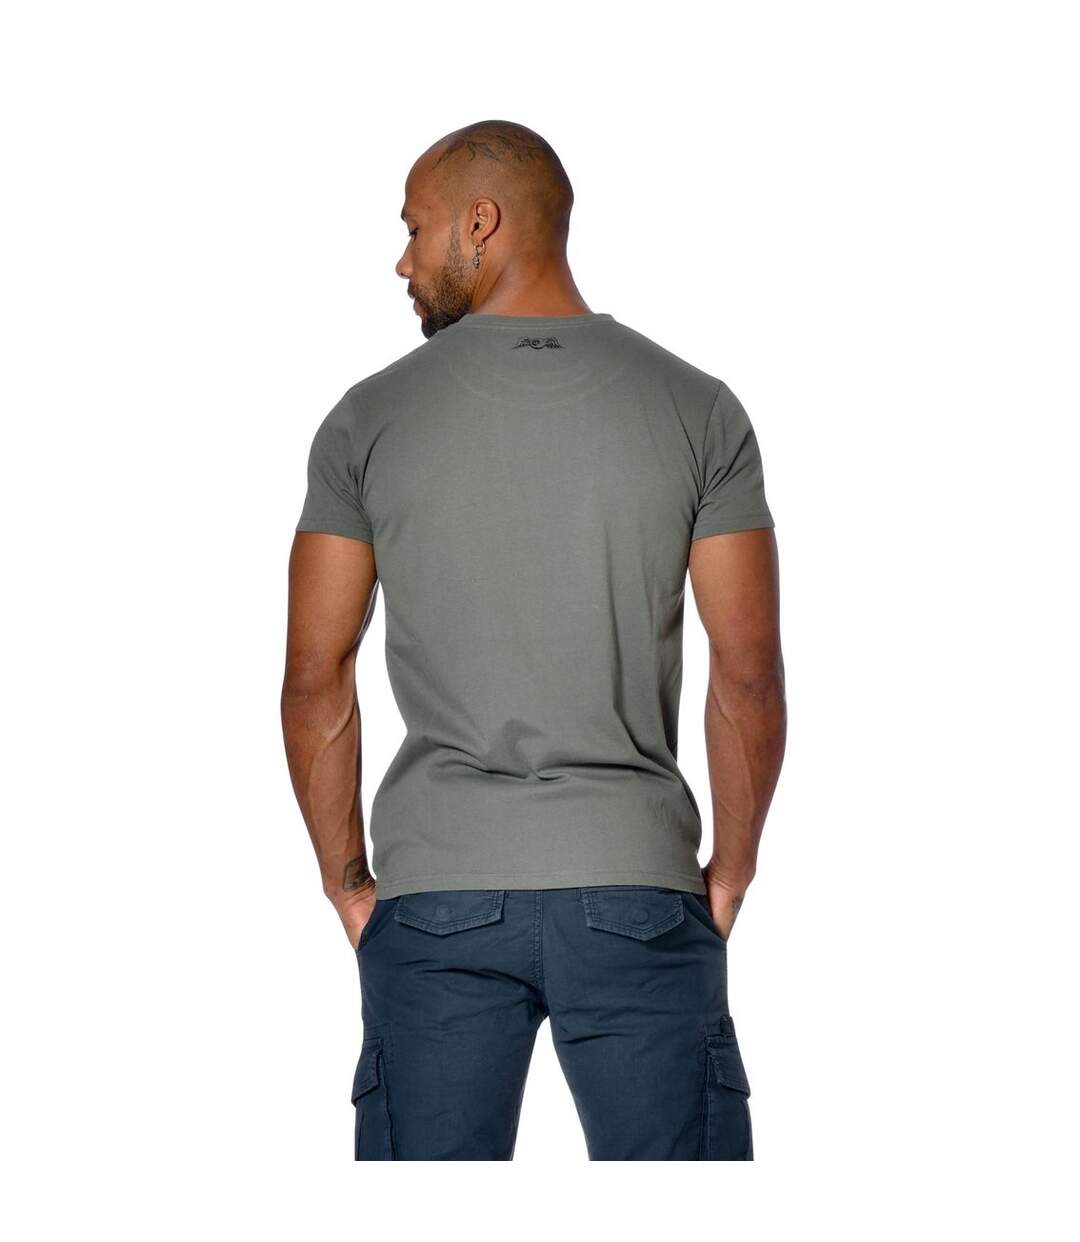 Tee Shirt Homme Blason USA, T Shirt Homme, 100% Coton, Anti-irritation et Durable